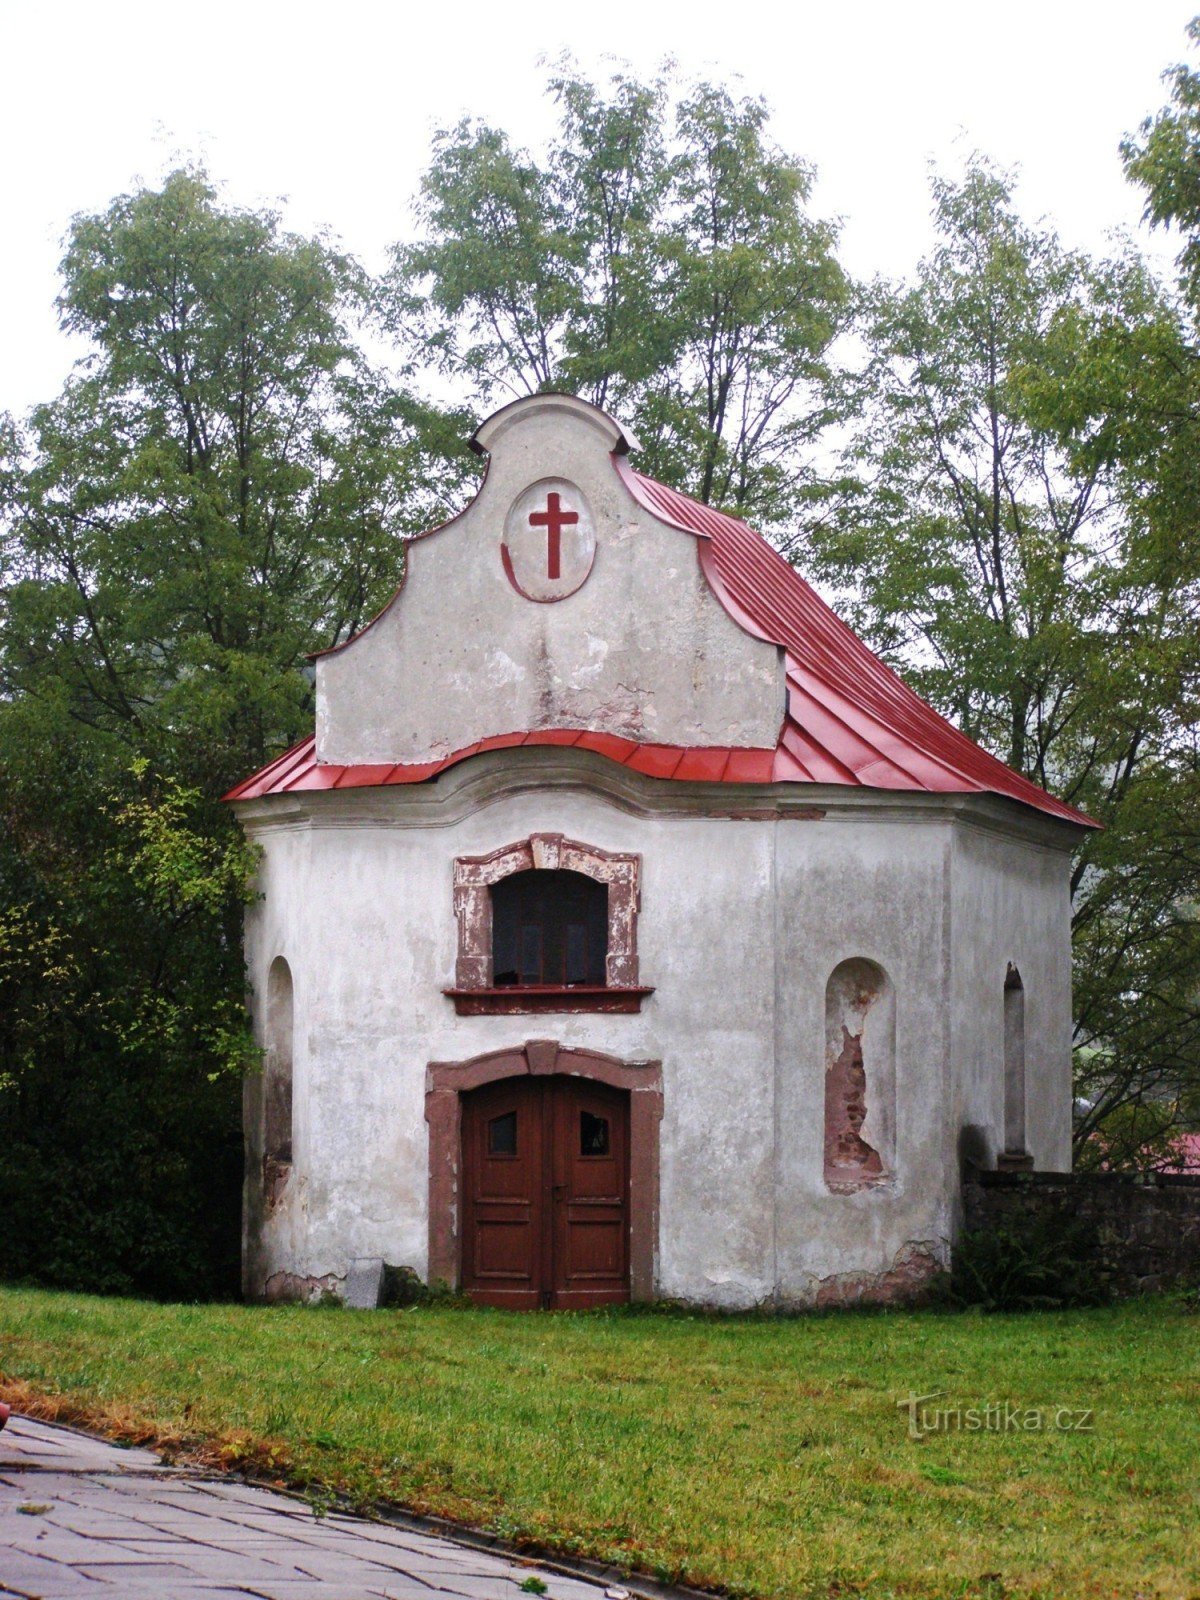 Nova Ves nad Popelkou - церква св. Прокопій